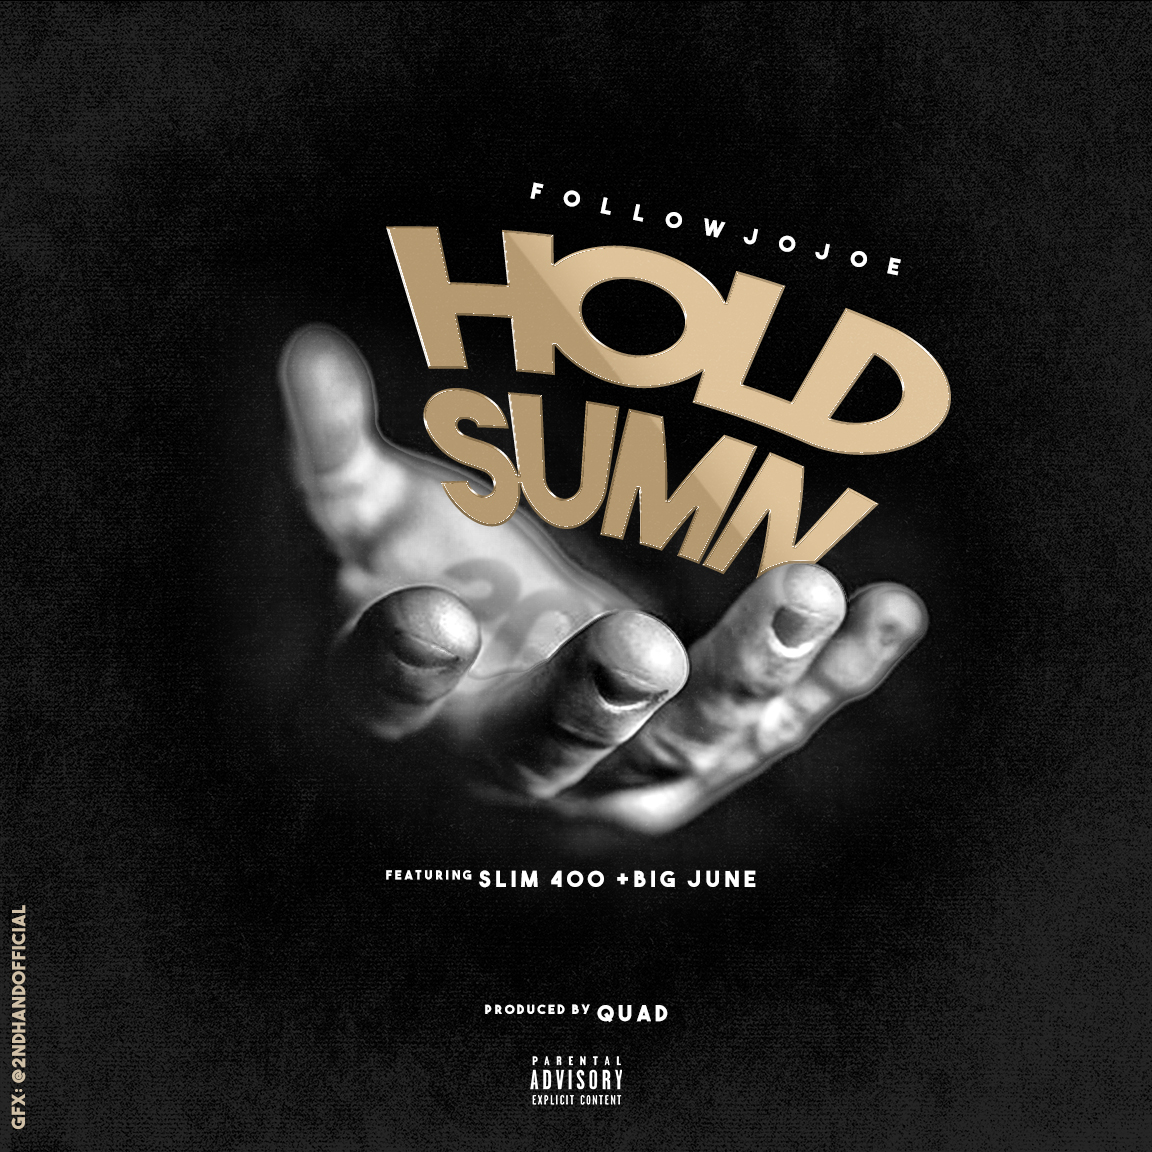 FollowJoJoe - Hold Sumn Featuring (YG's Artist) Slim 400 And Big June